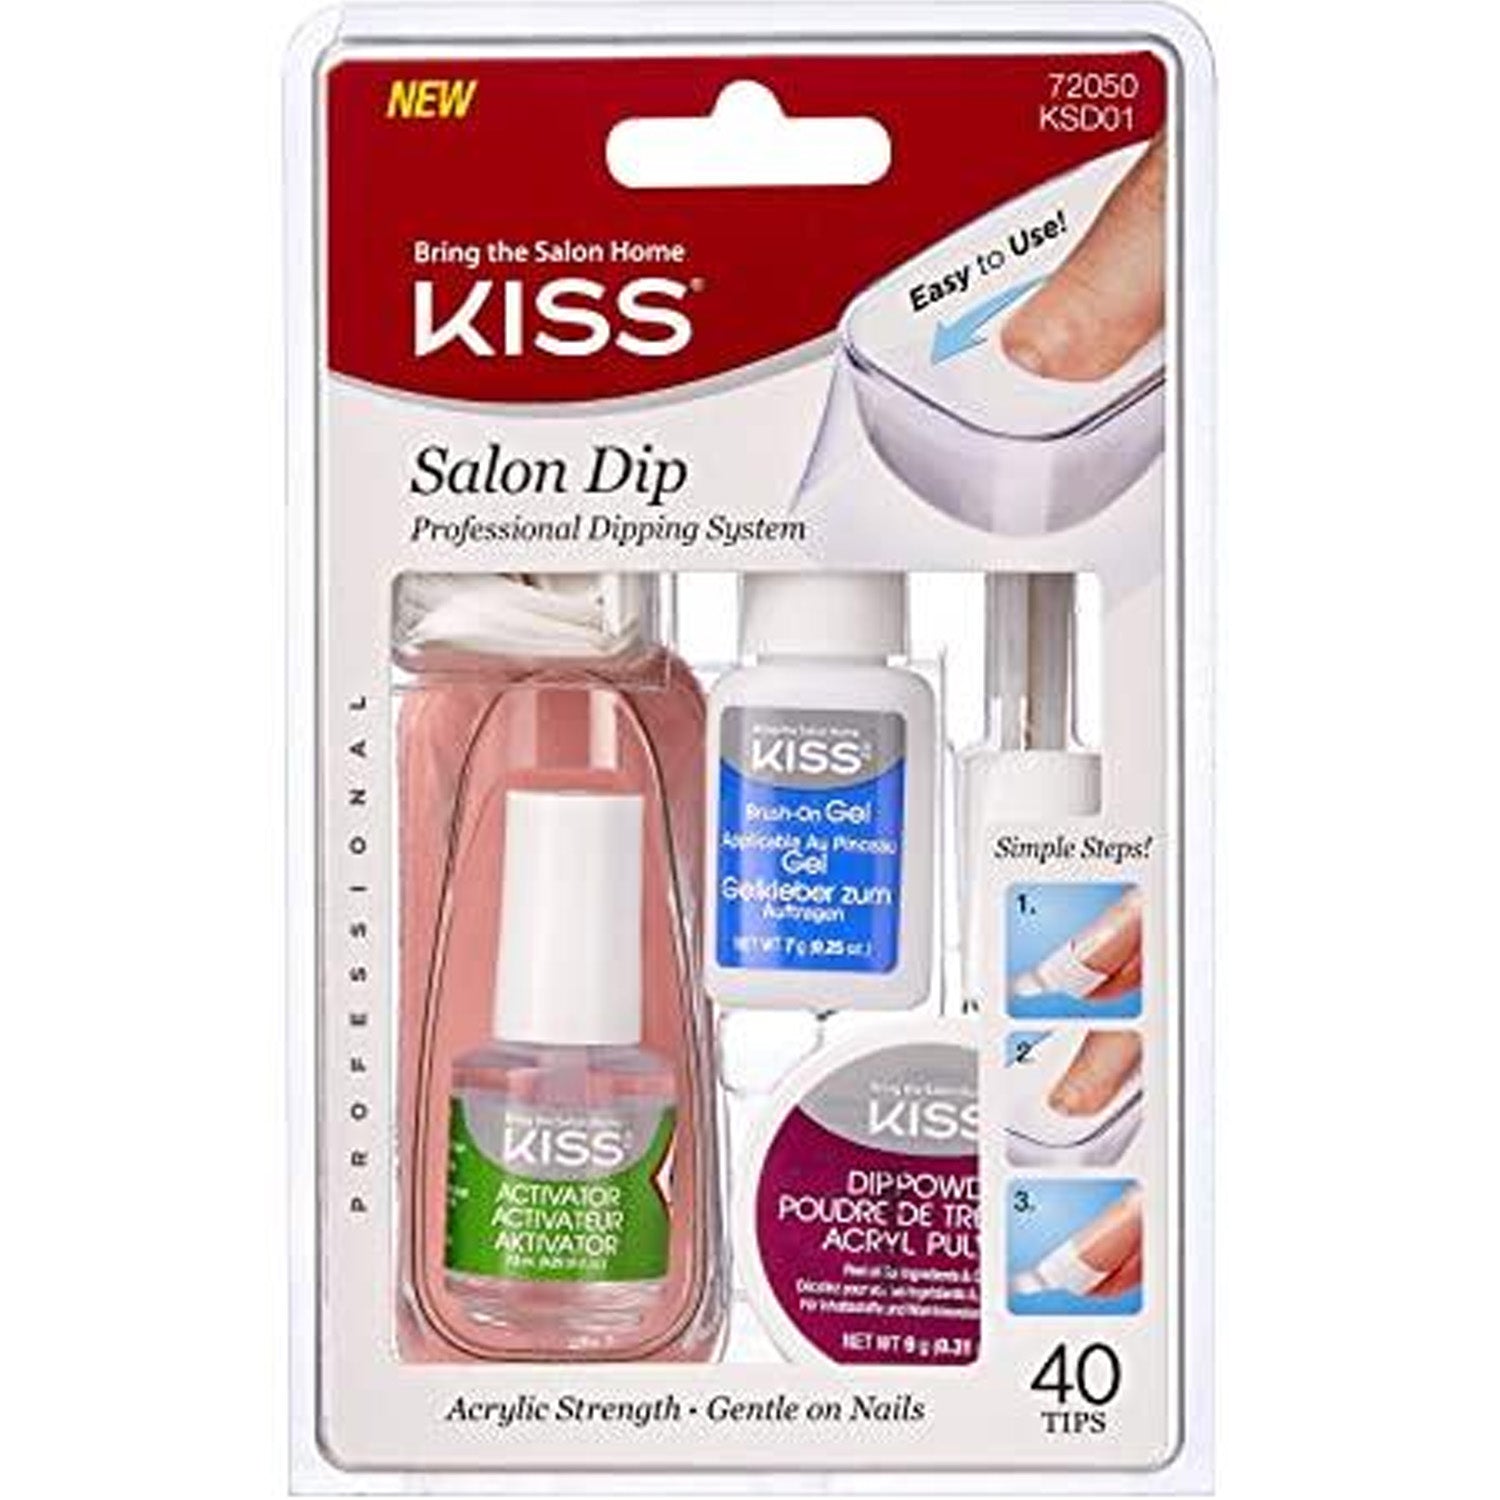 KISS SALON DIP KIT #KSD01